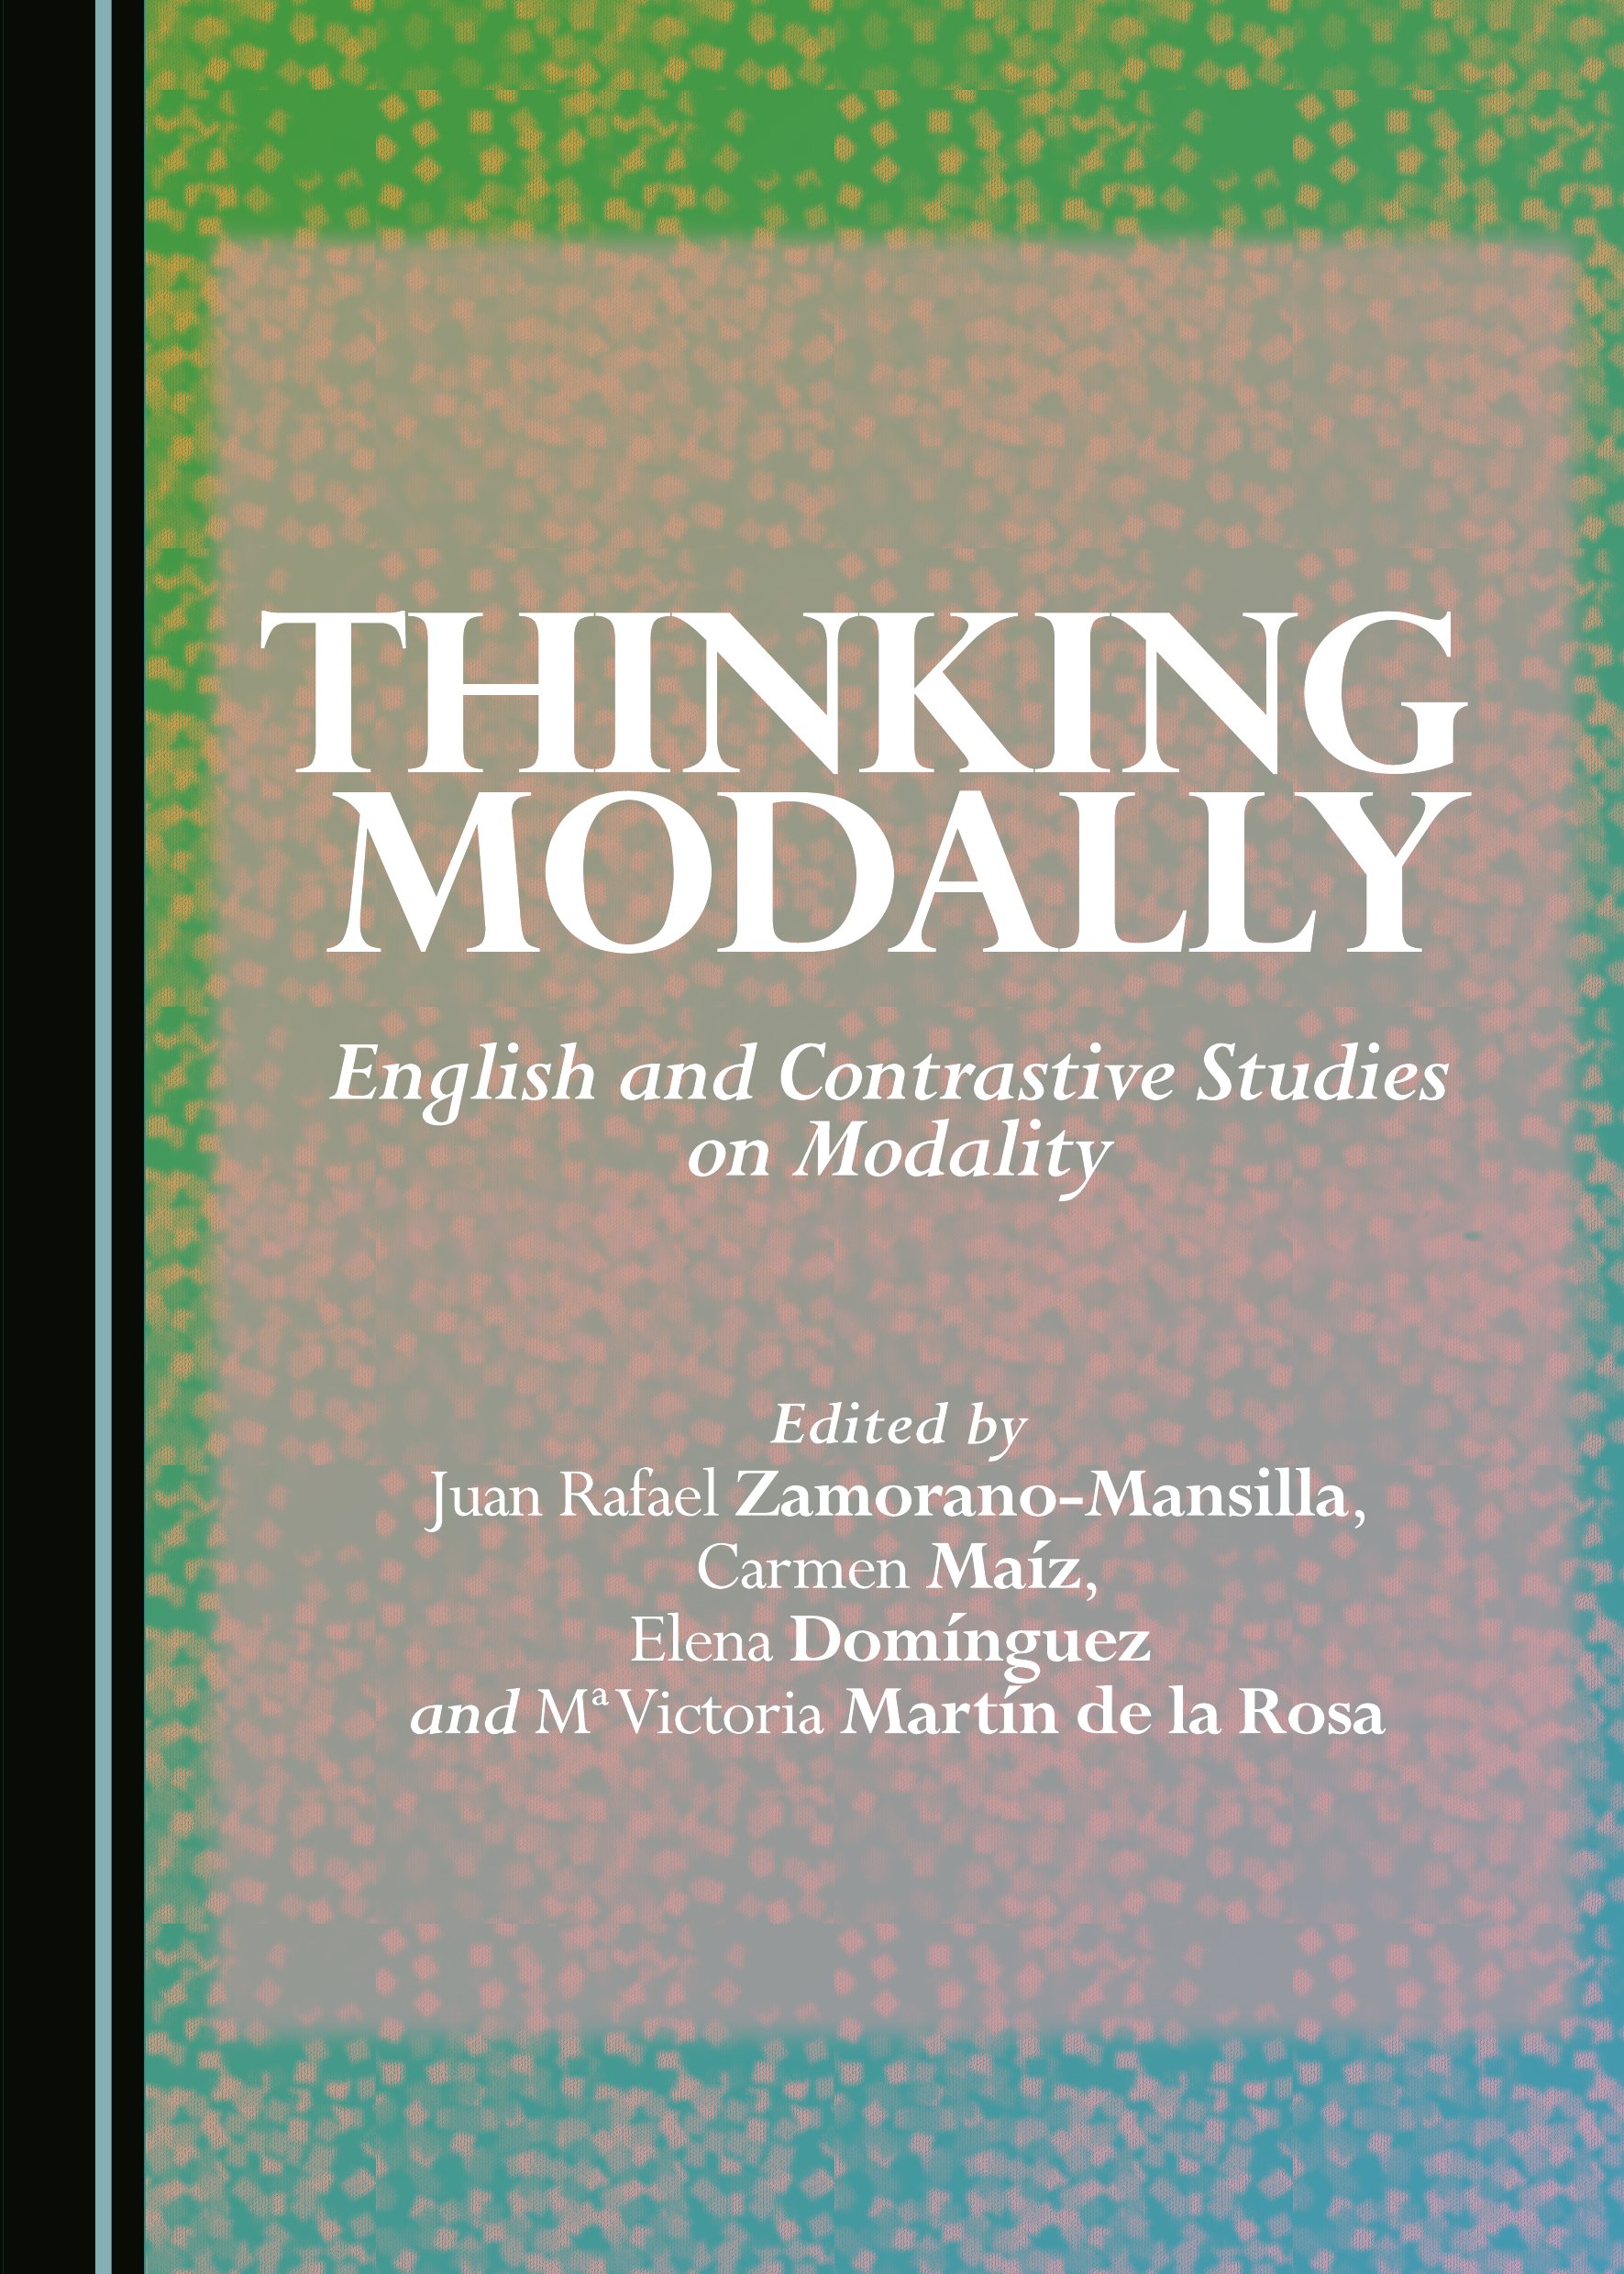 Imagen de portada del libro Thinking modally